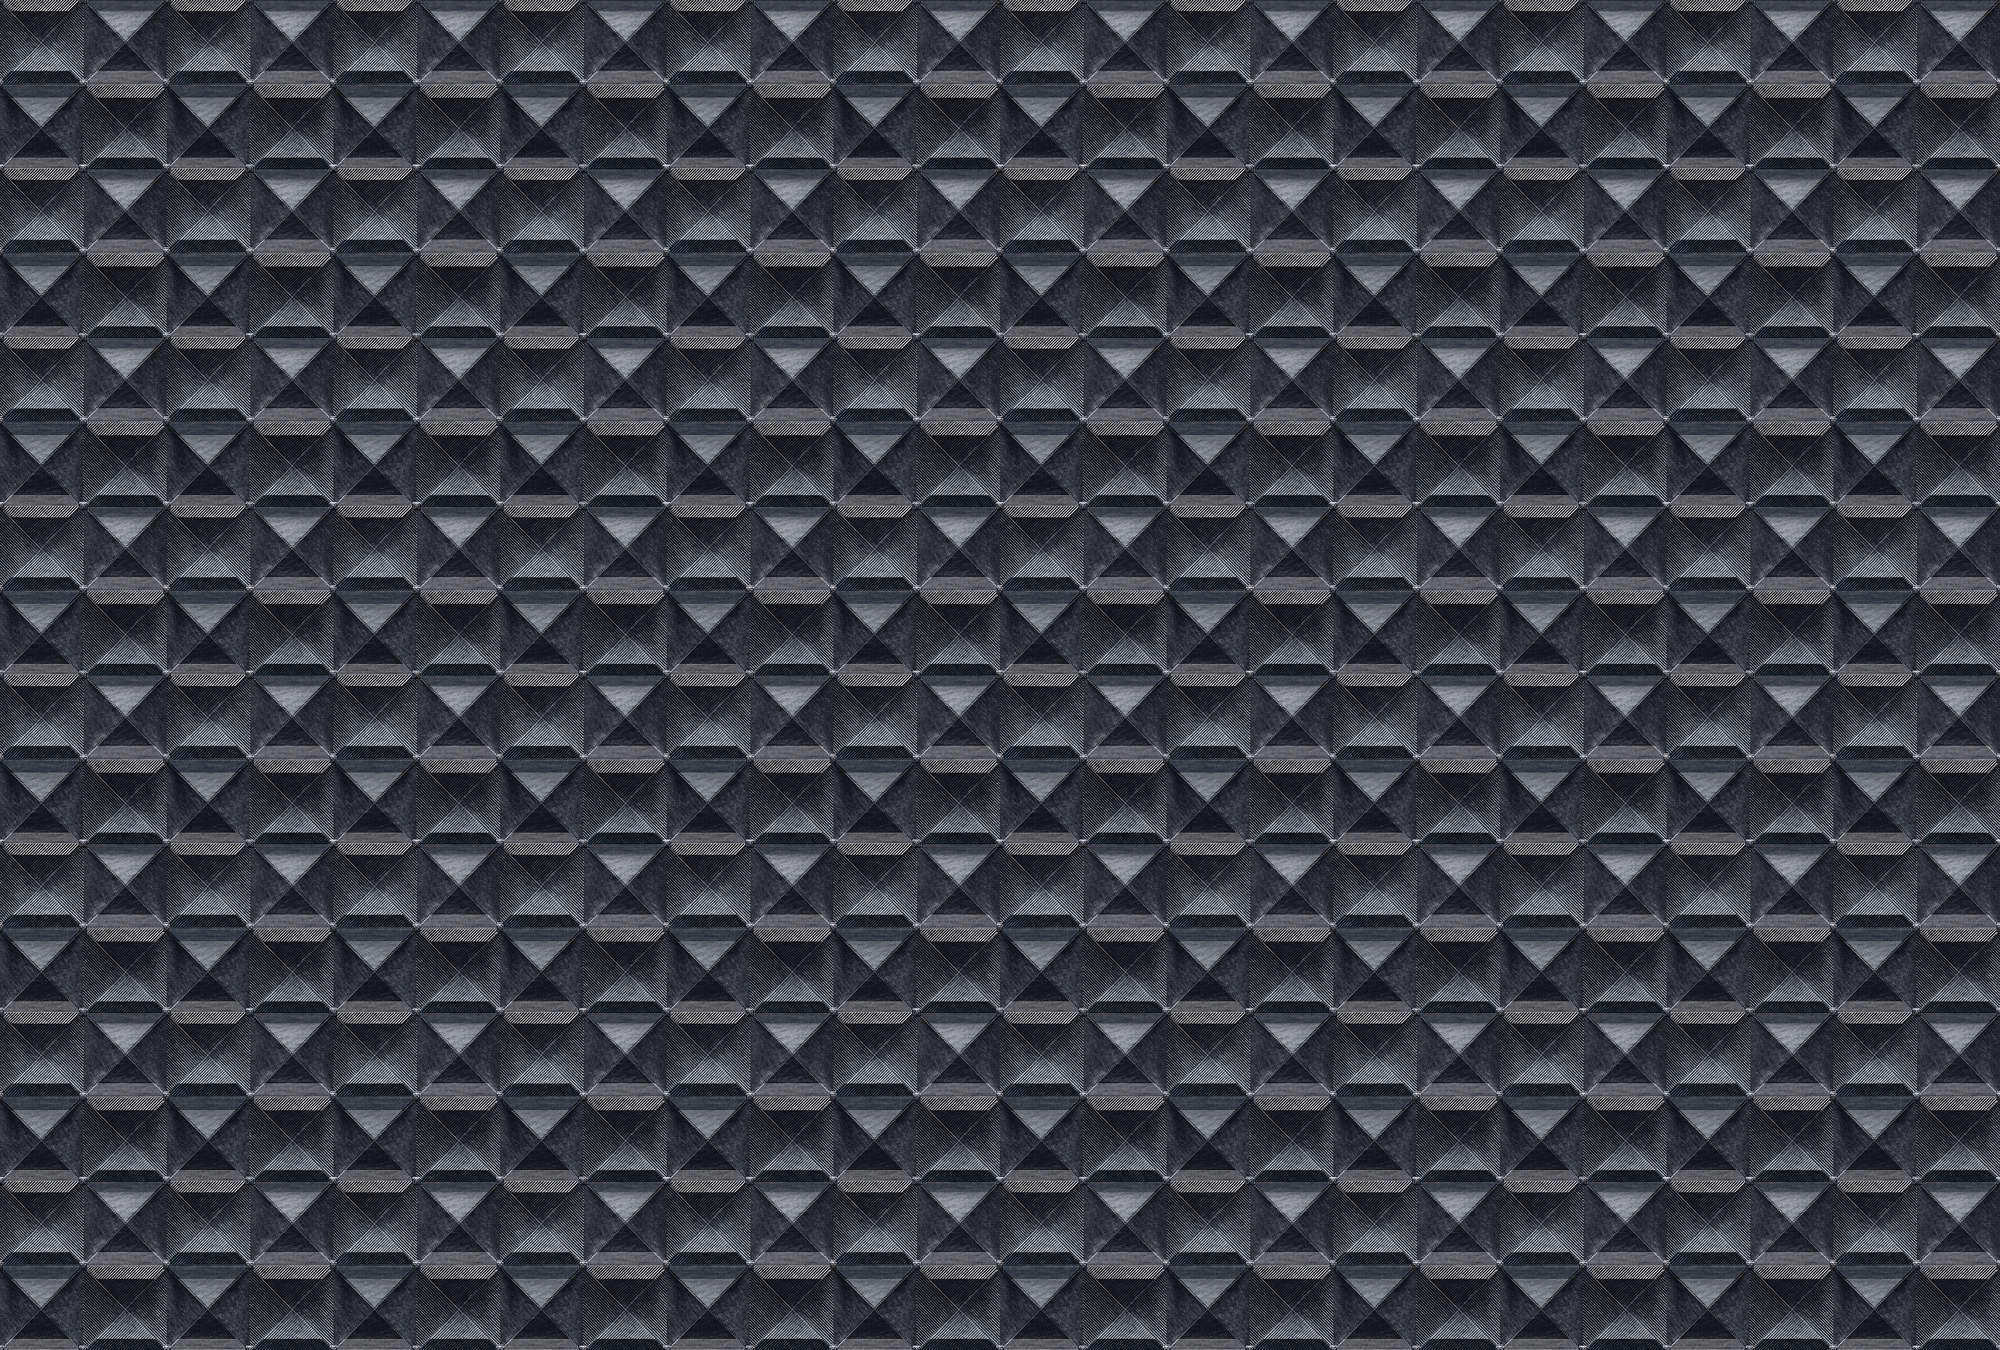             The edge 2 - 3D wallpaper with lozenge metal design - blue, black | pearlescent smooth fleece
        